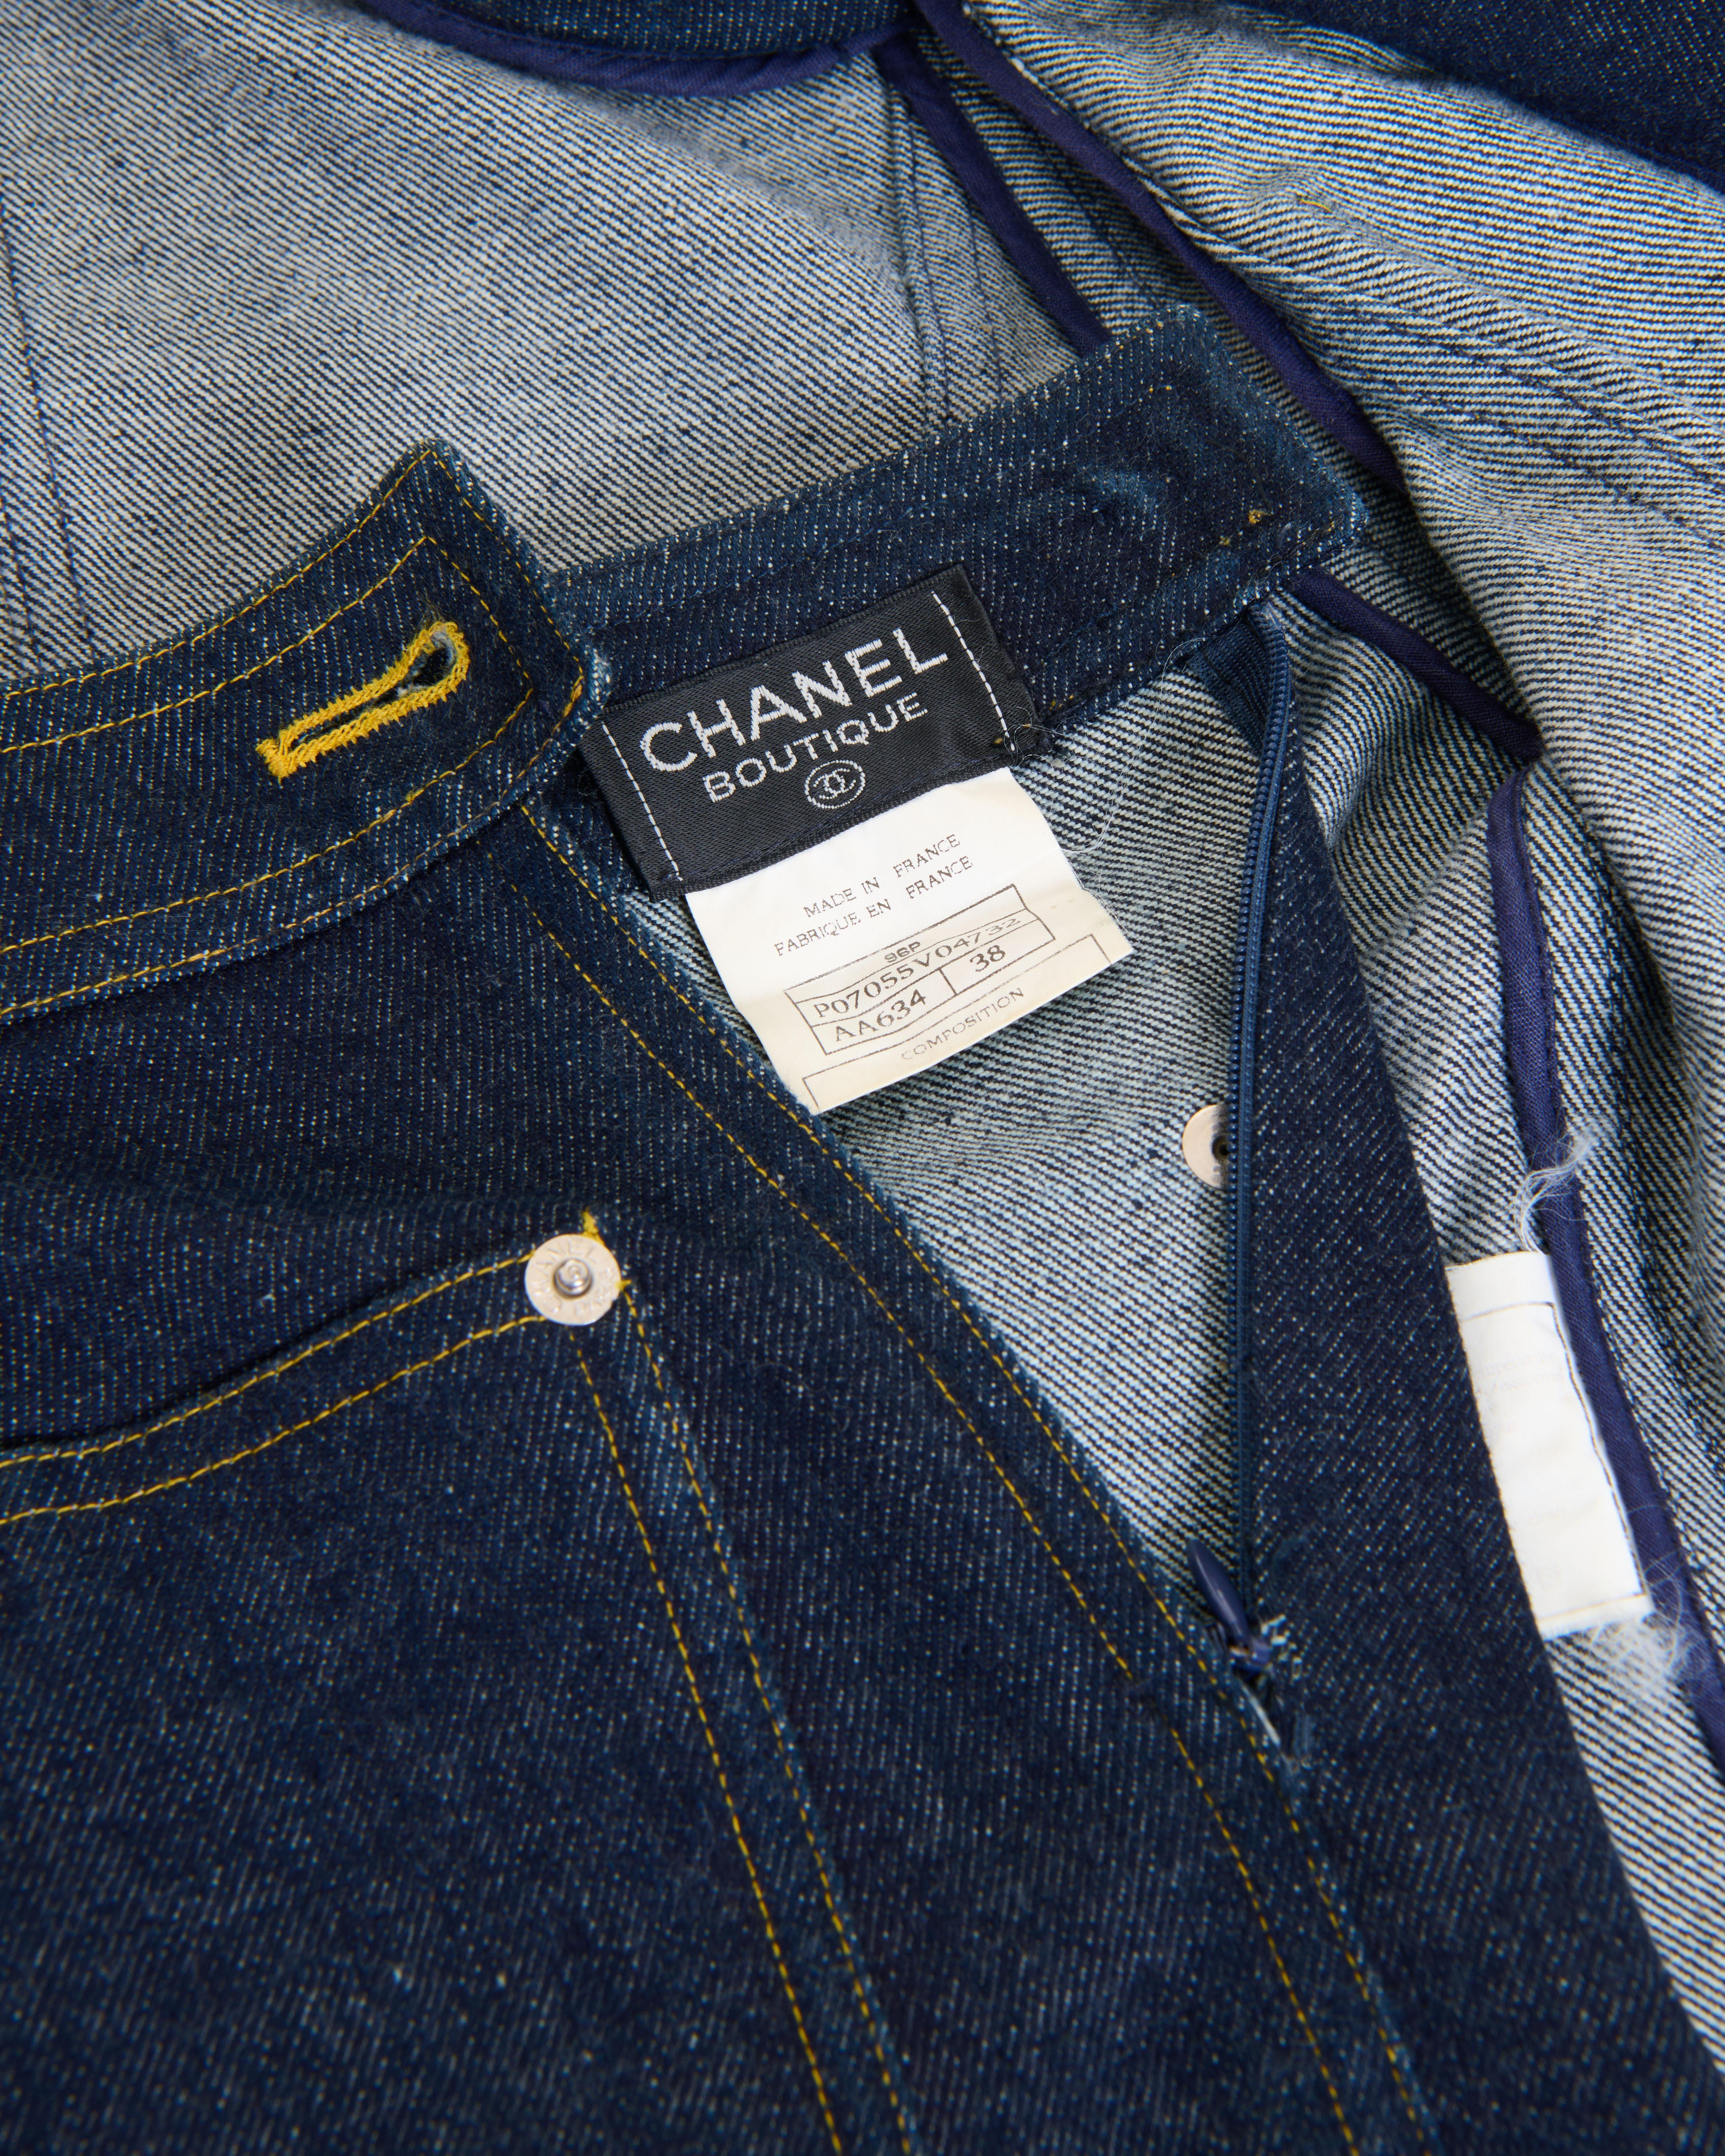 Chanel by Karl Lagerfeld S/S 1996 Ensemble veste et mini-jupe en denim bleu indigo en vente 10